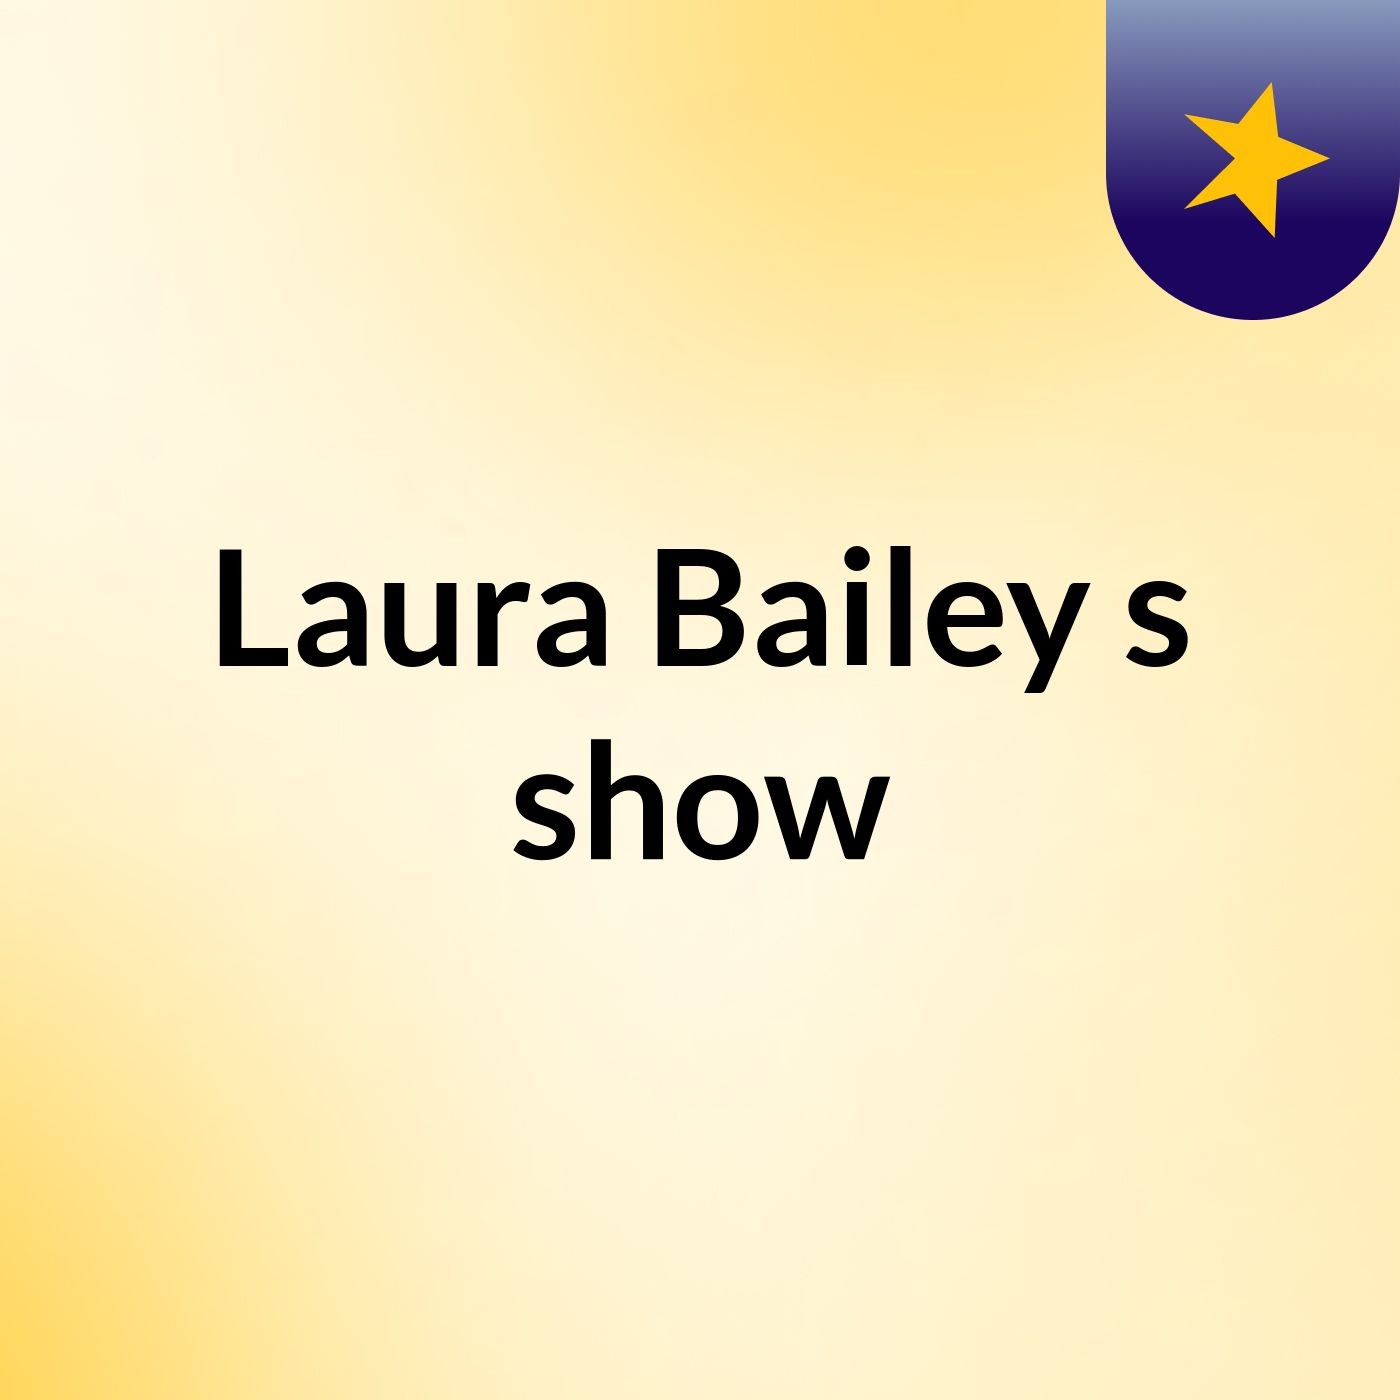 Laura Bailey's show